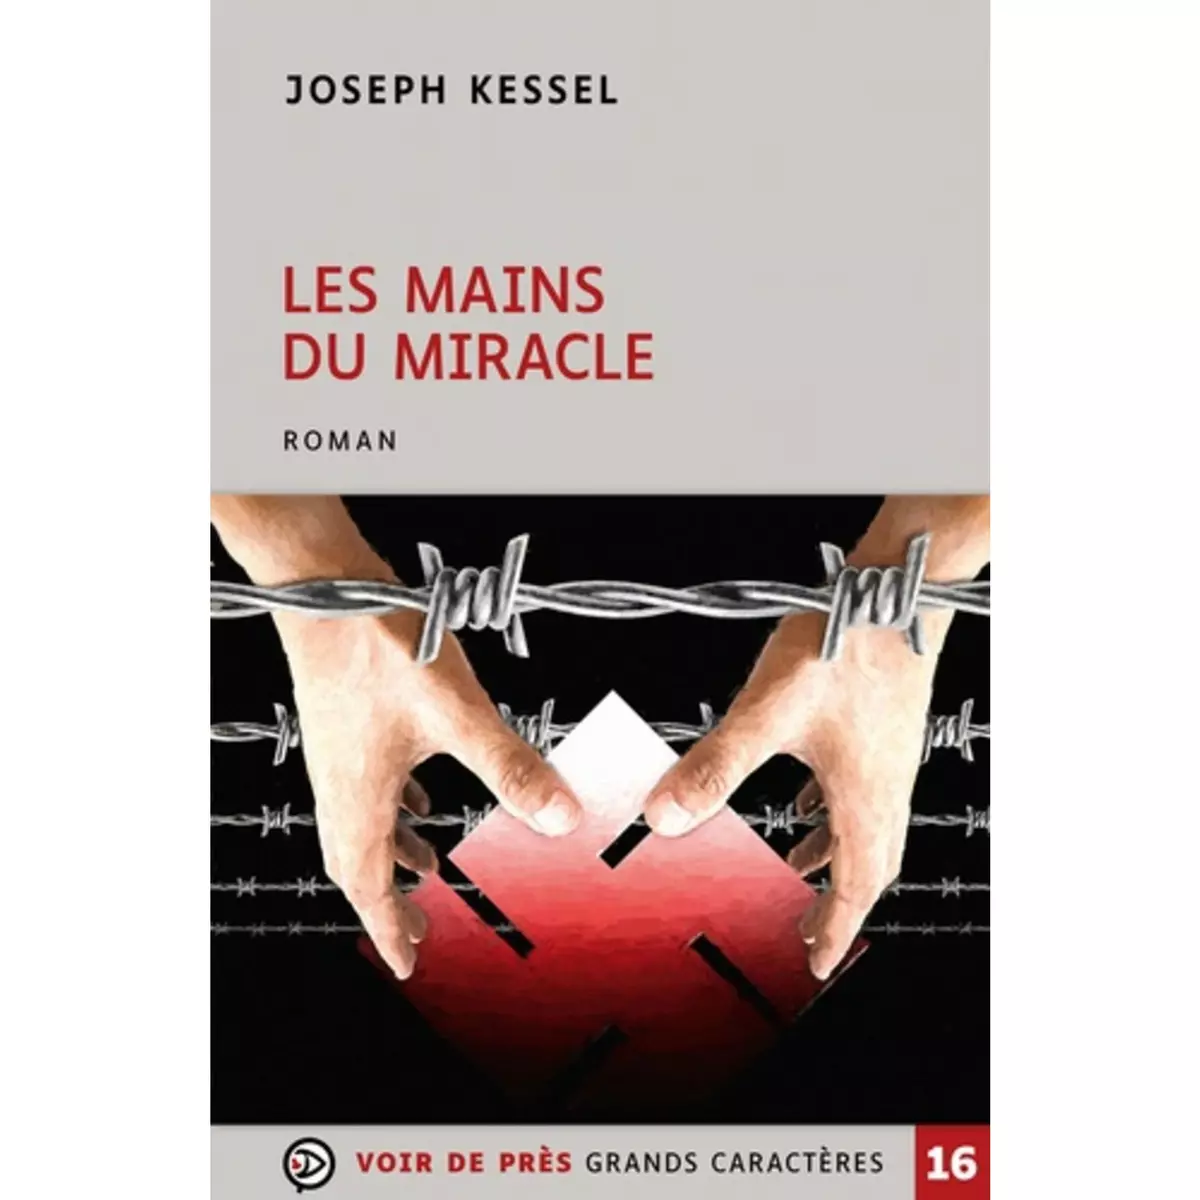  LES MAINS DU MIRACLE [EDITION EN GROS CARACTERES], Kessel Joseph